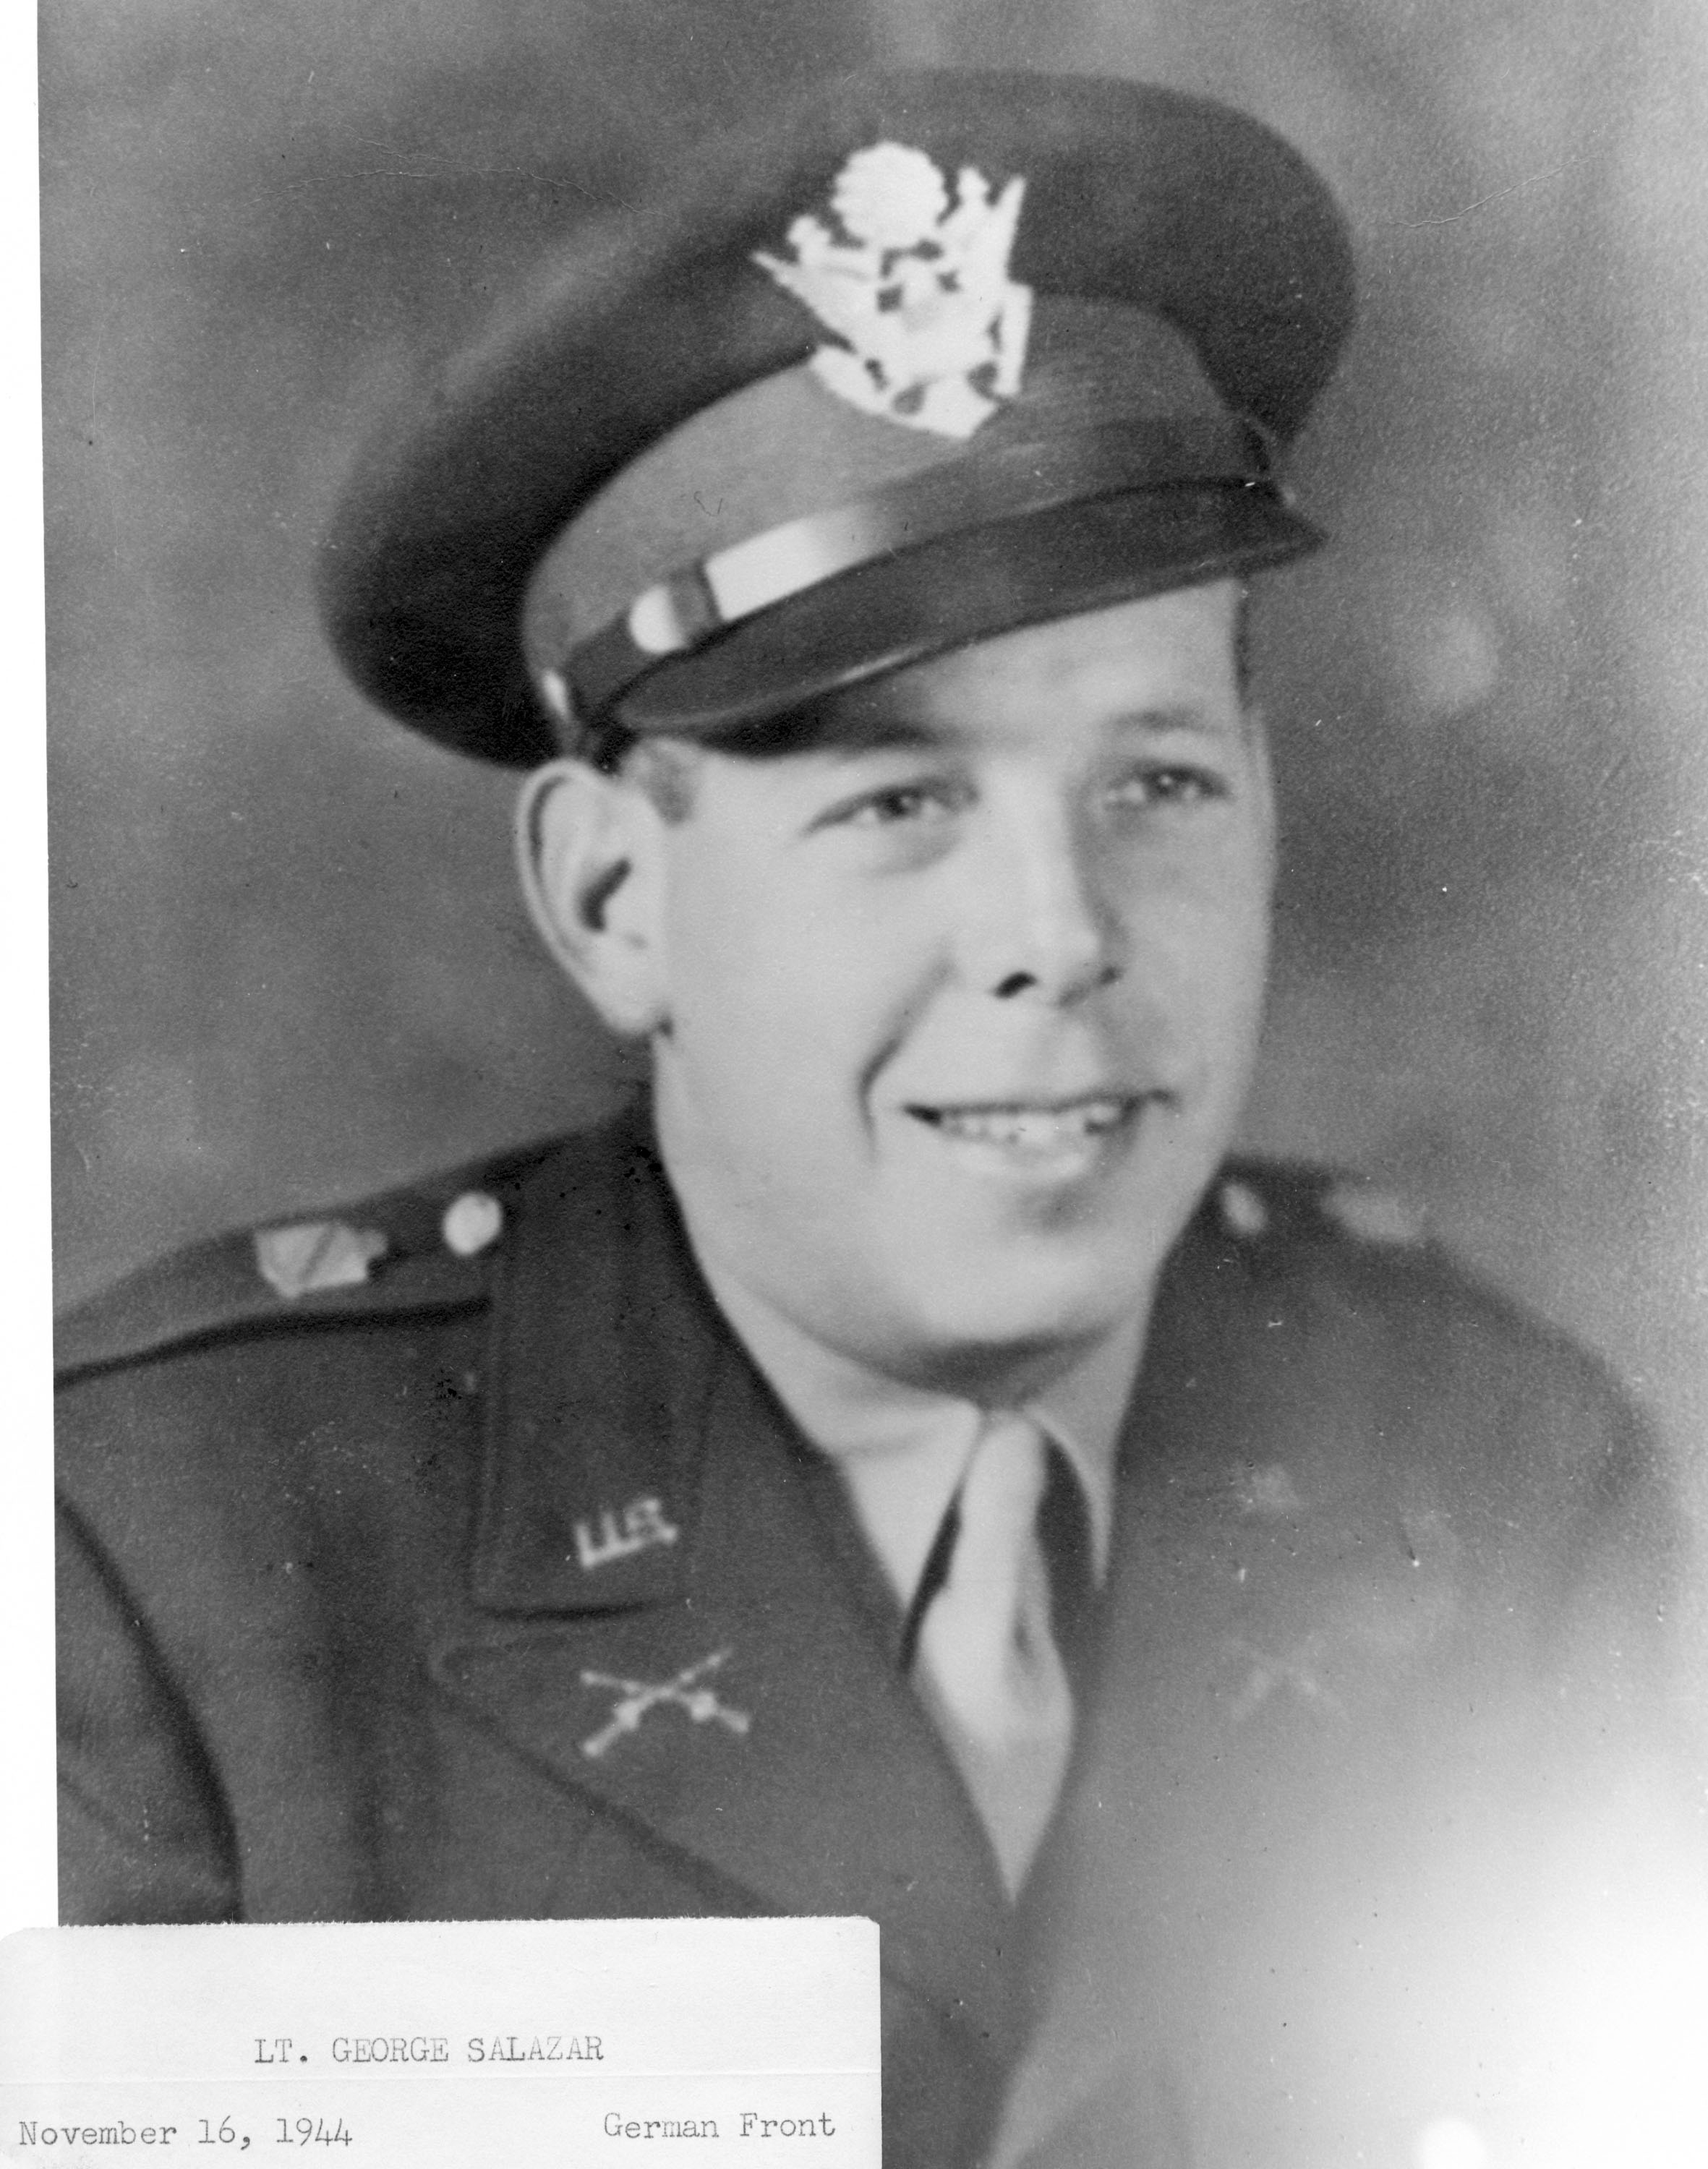 Lt. George Salazar